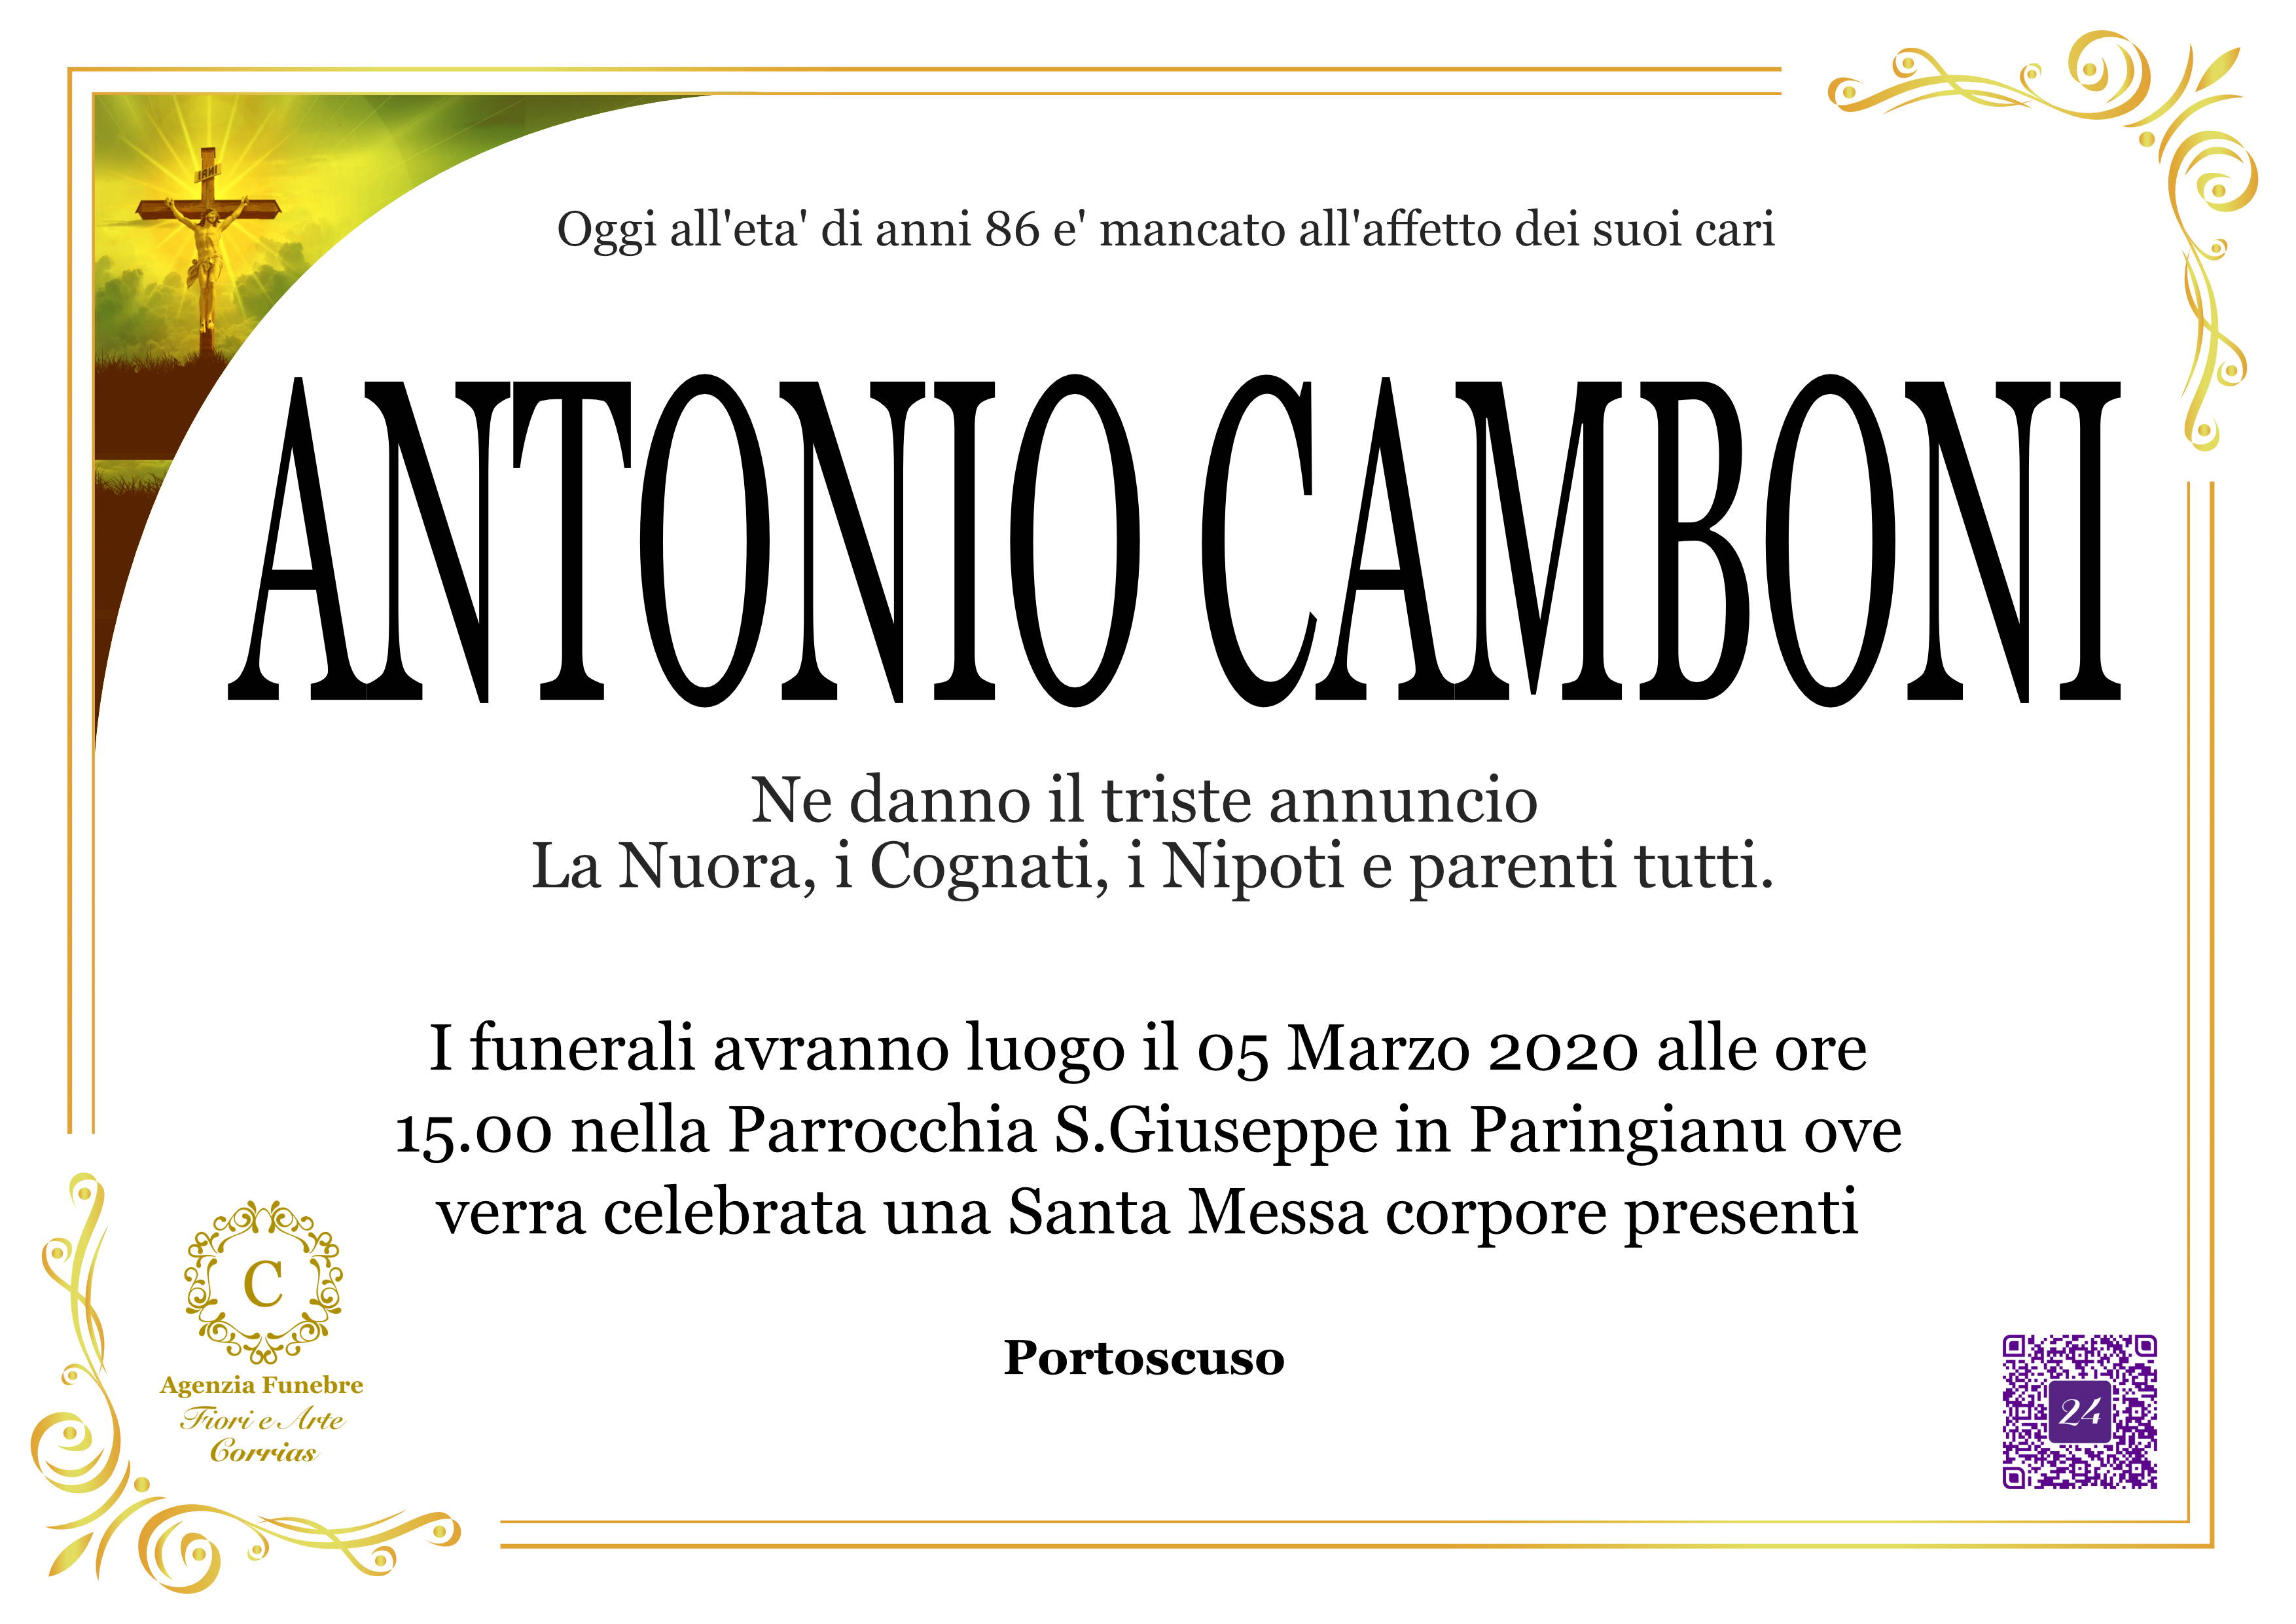 Antonio Camboni